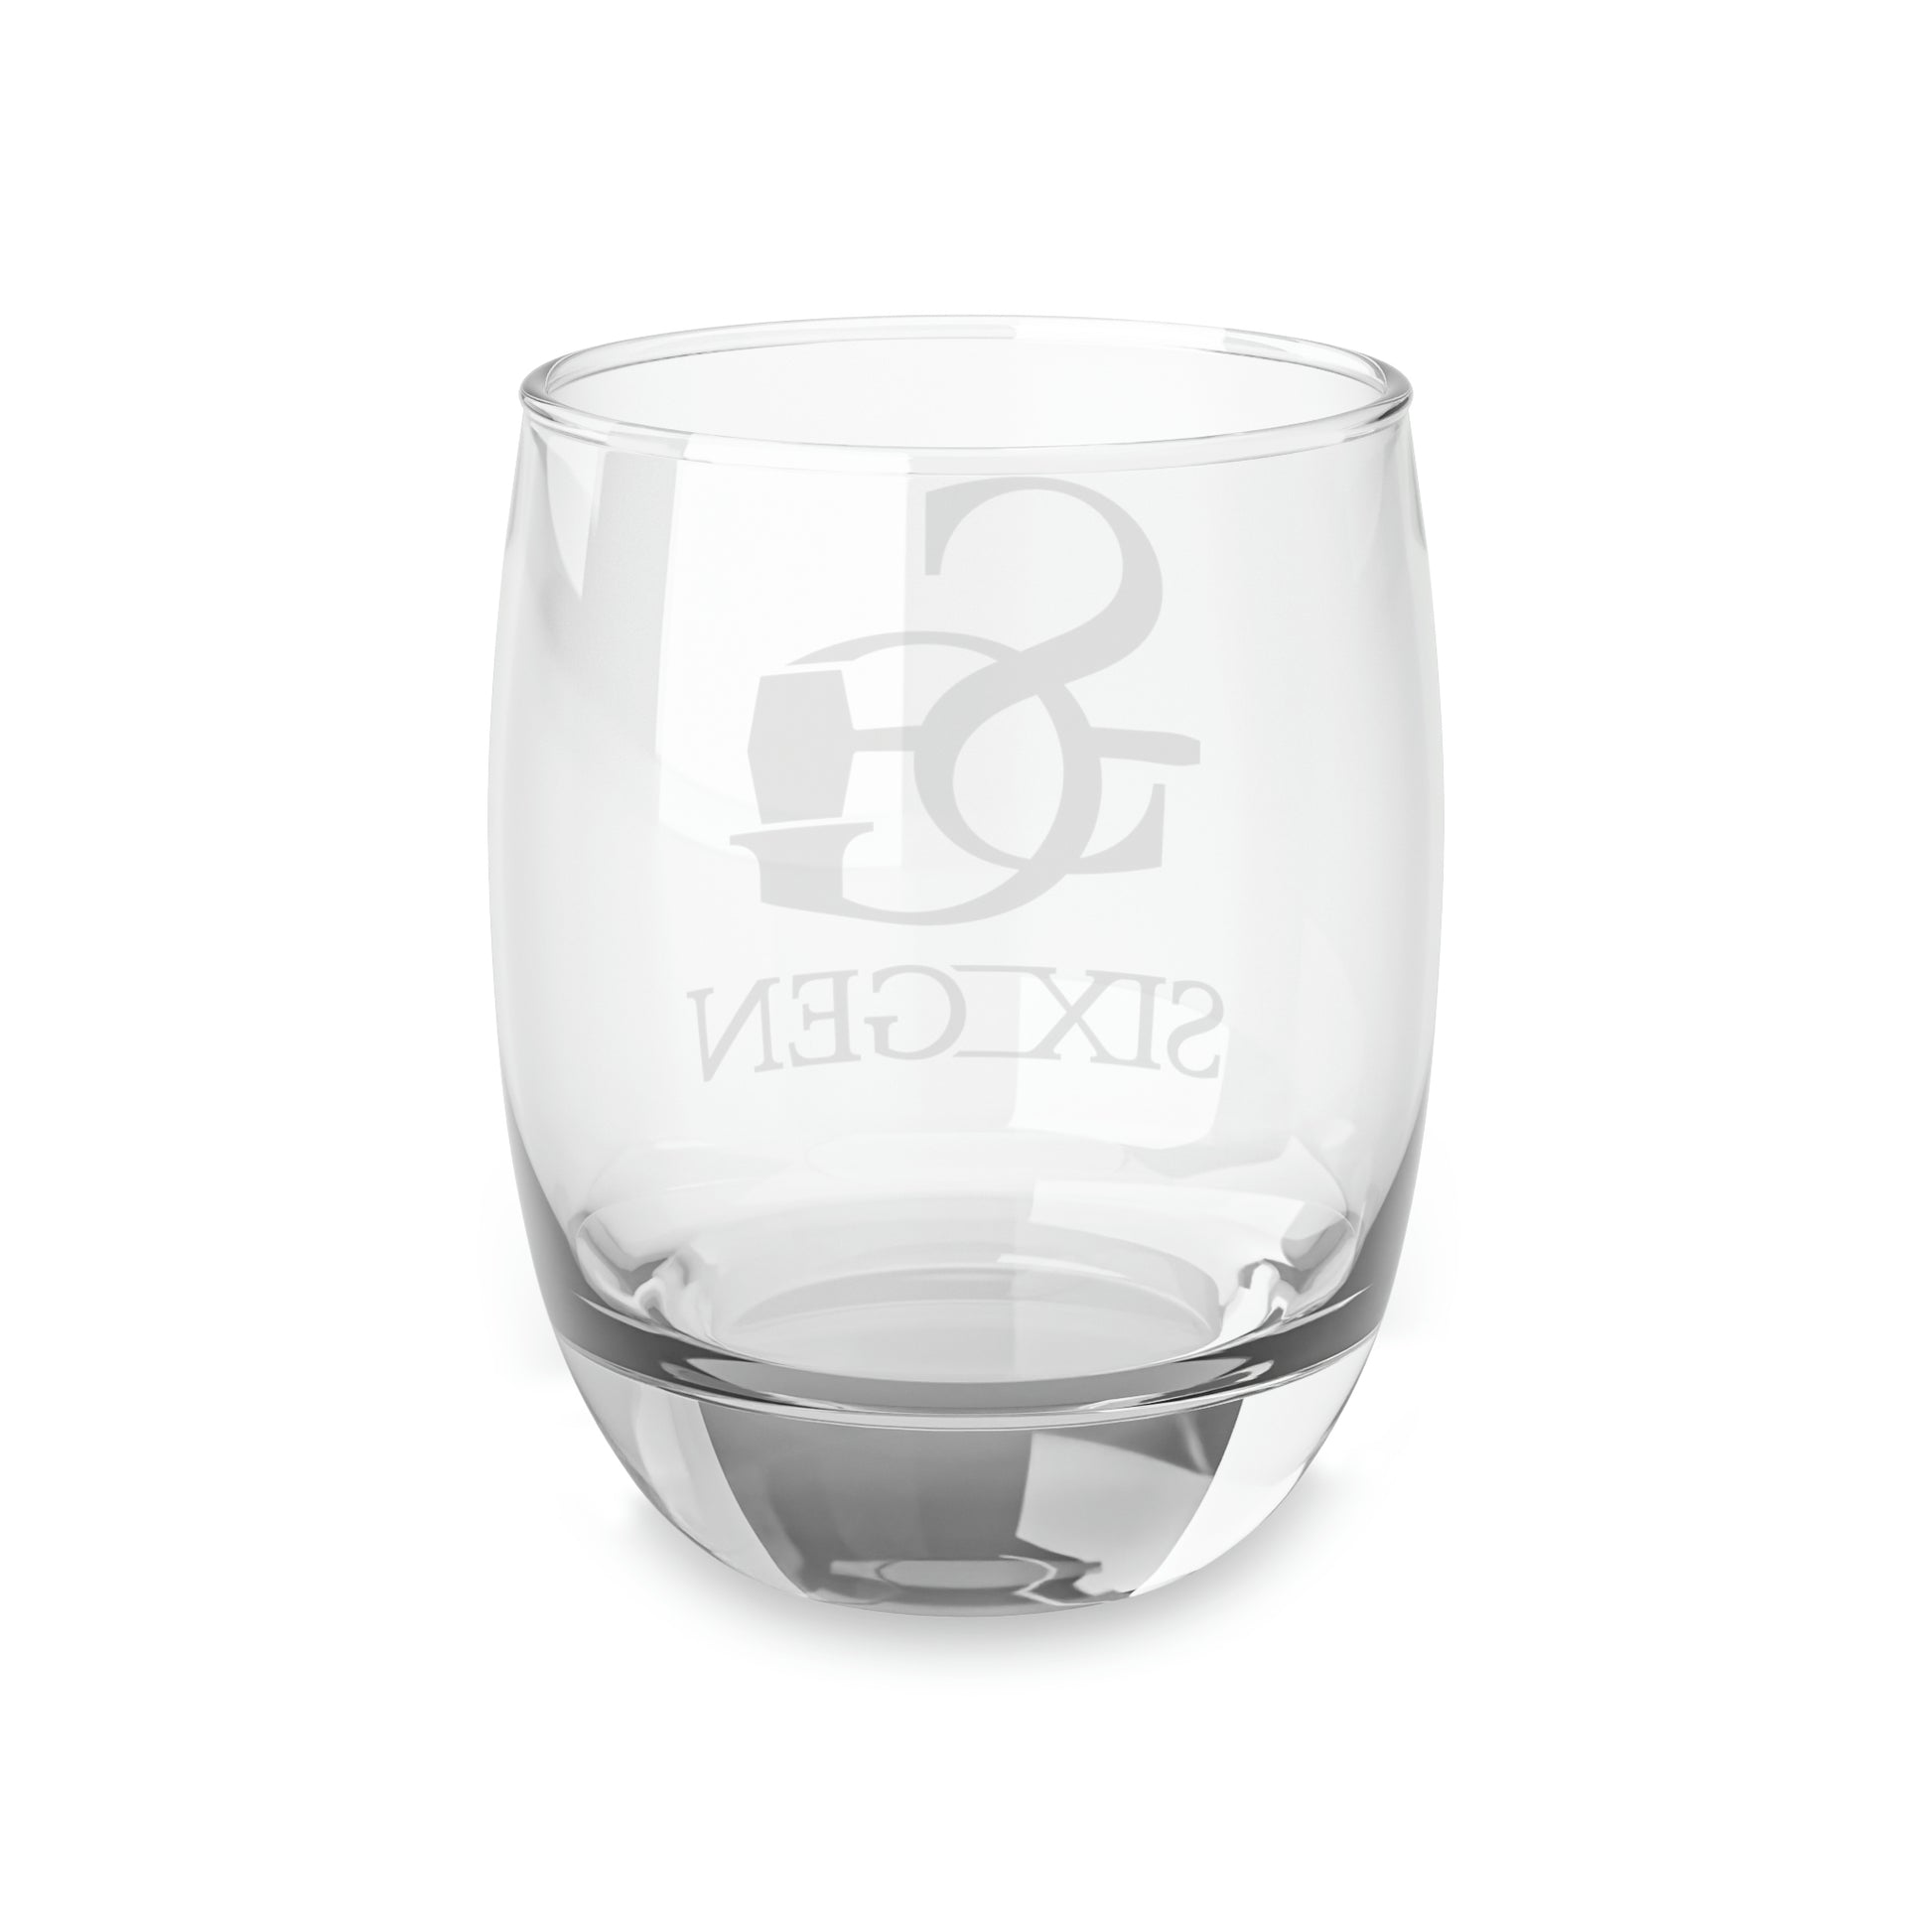 Whiskey Glass with Six-Gen Logo